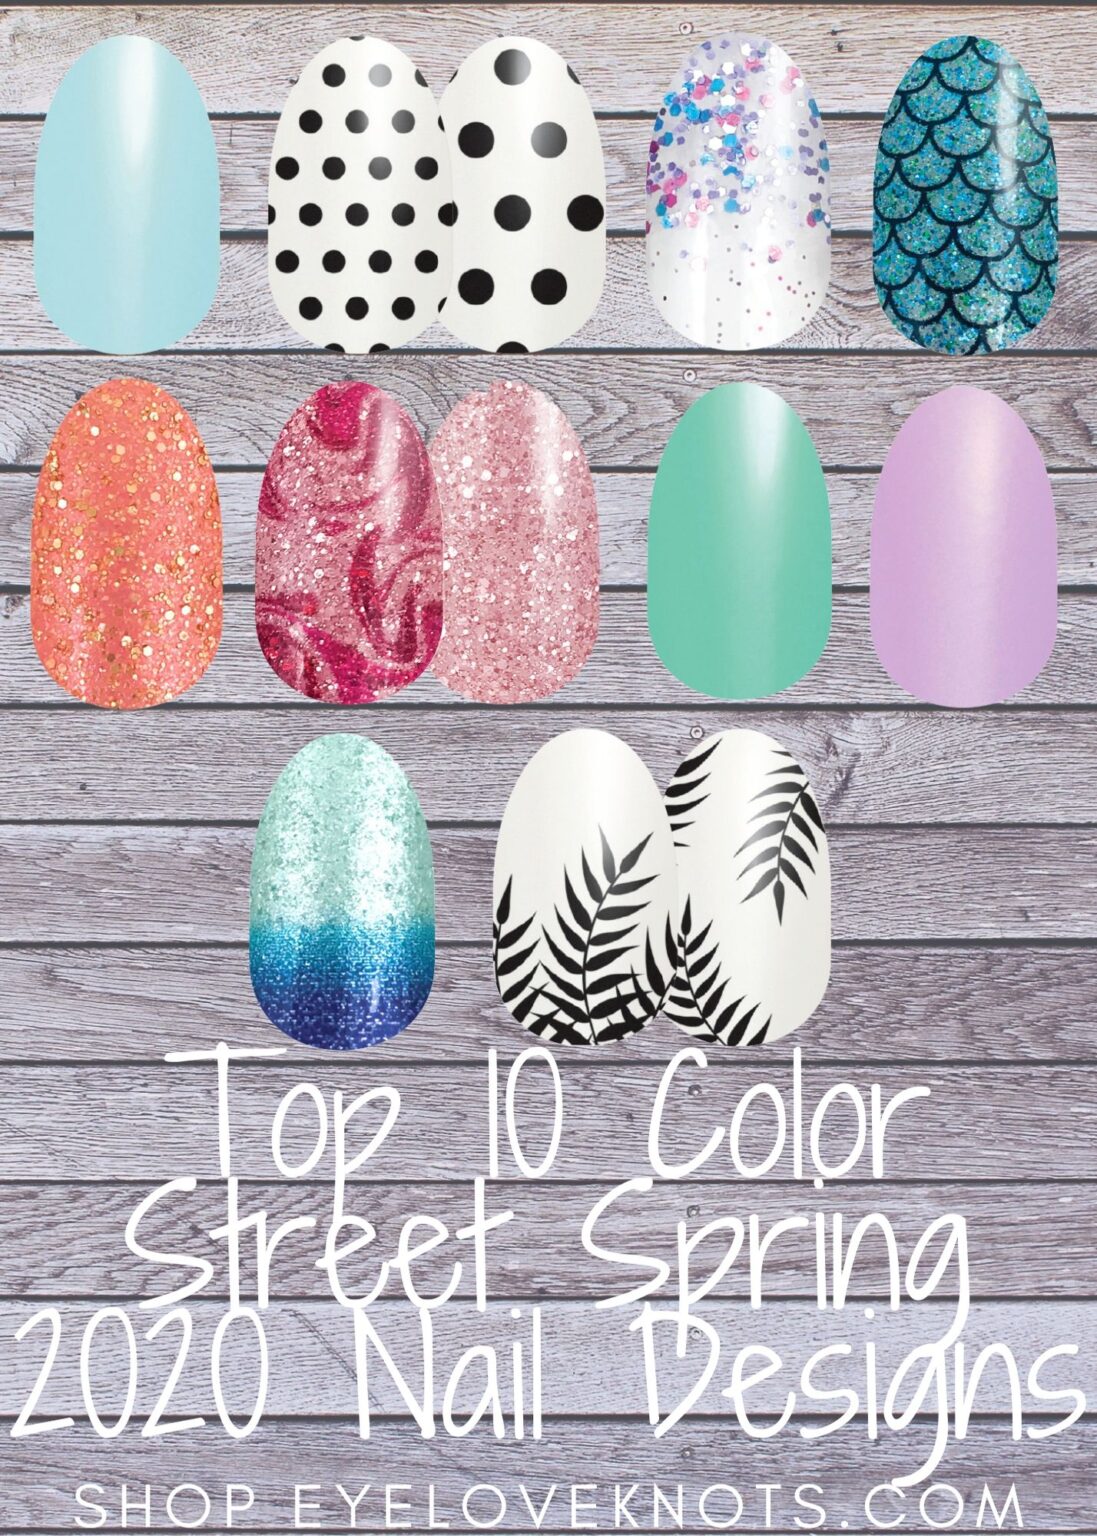 Top 10 Color Street Spring 2020 Nail Designs EyeLoveKnots